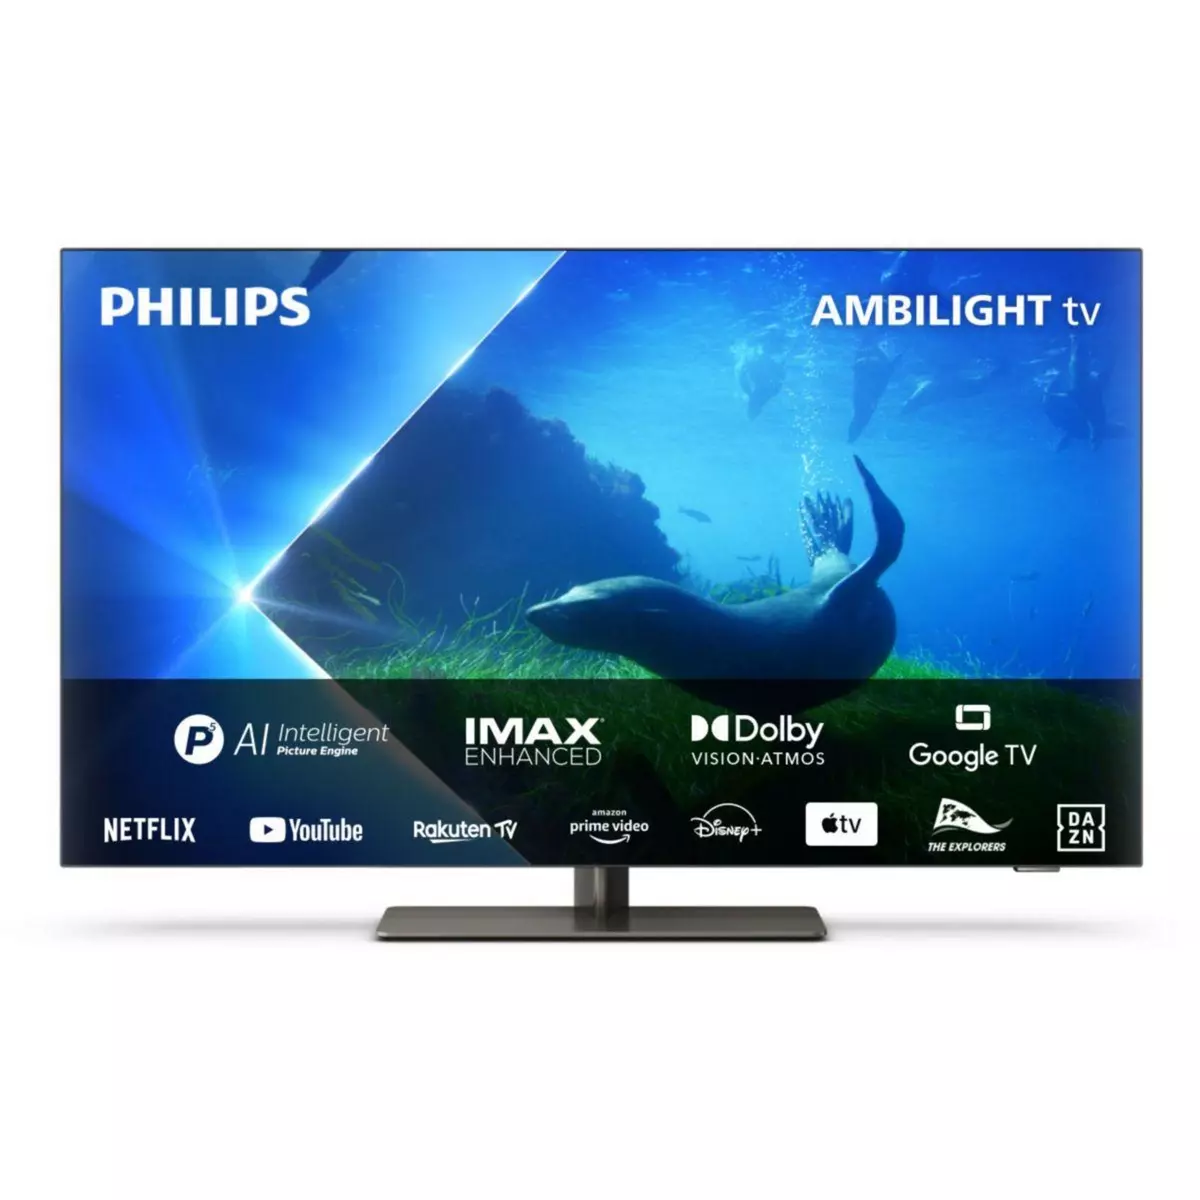 Philips TV OLED 48OLED808 Ambilight